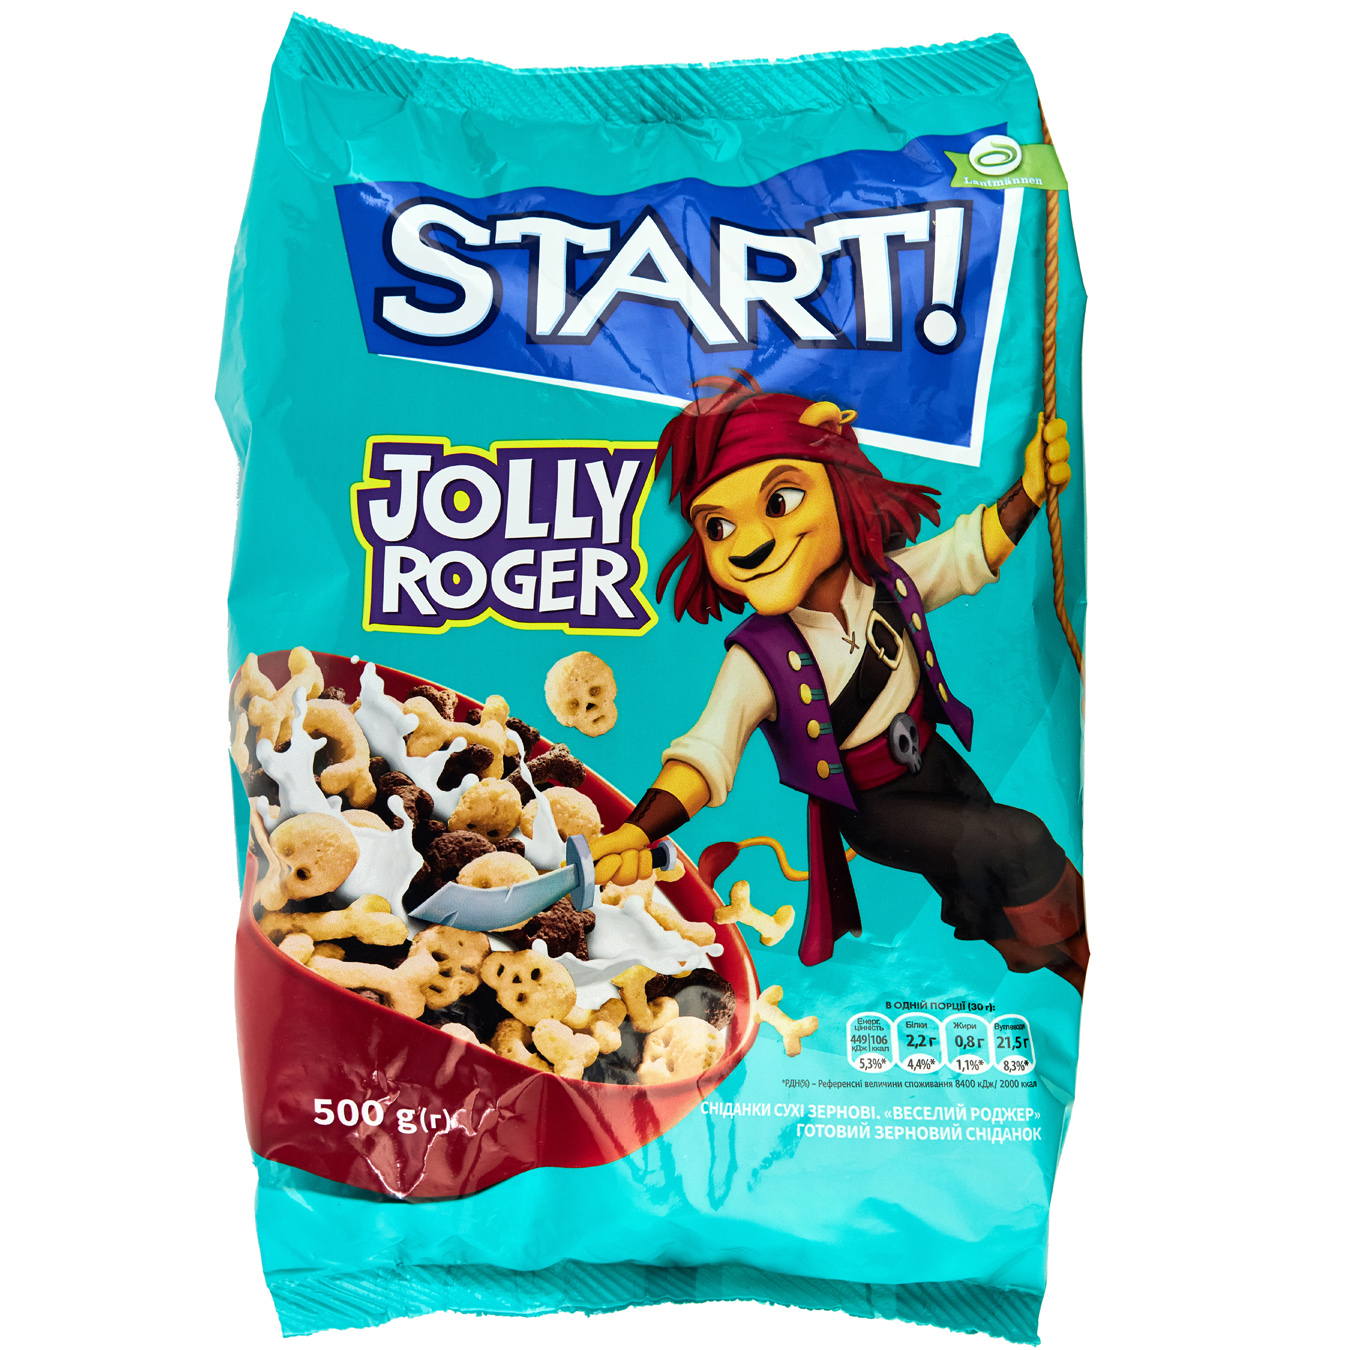 Start! Ready breakfast Jolly Roger cereal 500g